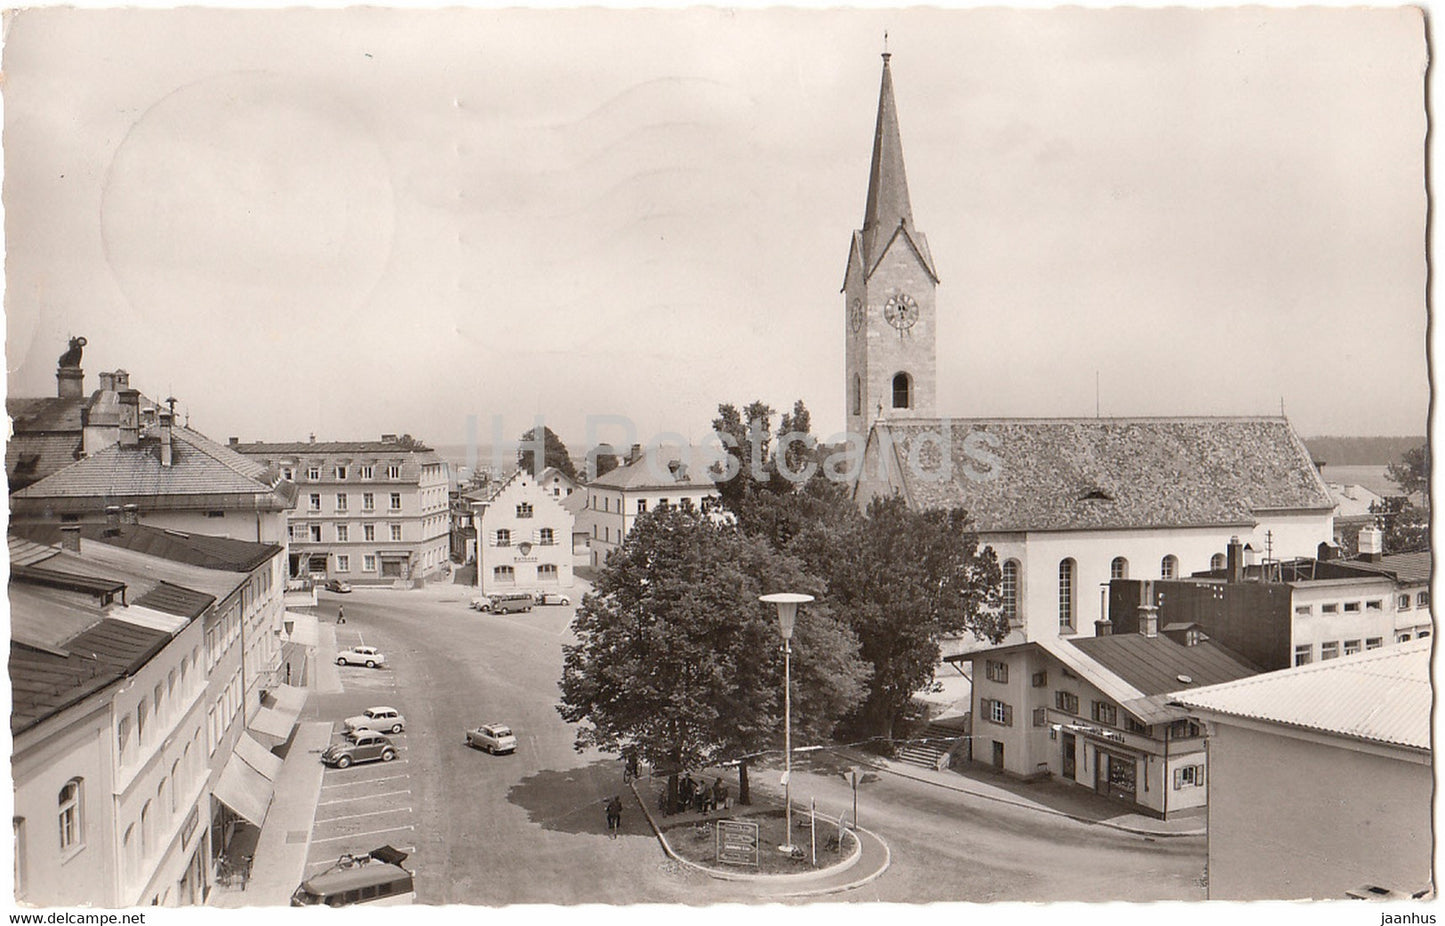 Holzkirchen - Marktplatz - car - church - old postcard - Germany - used - JH Postcards